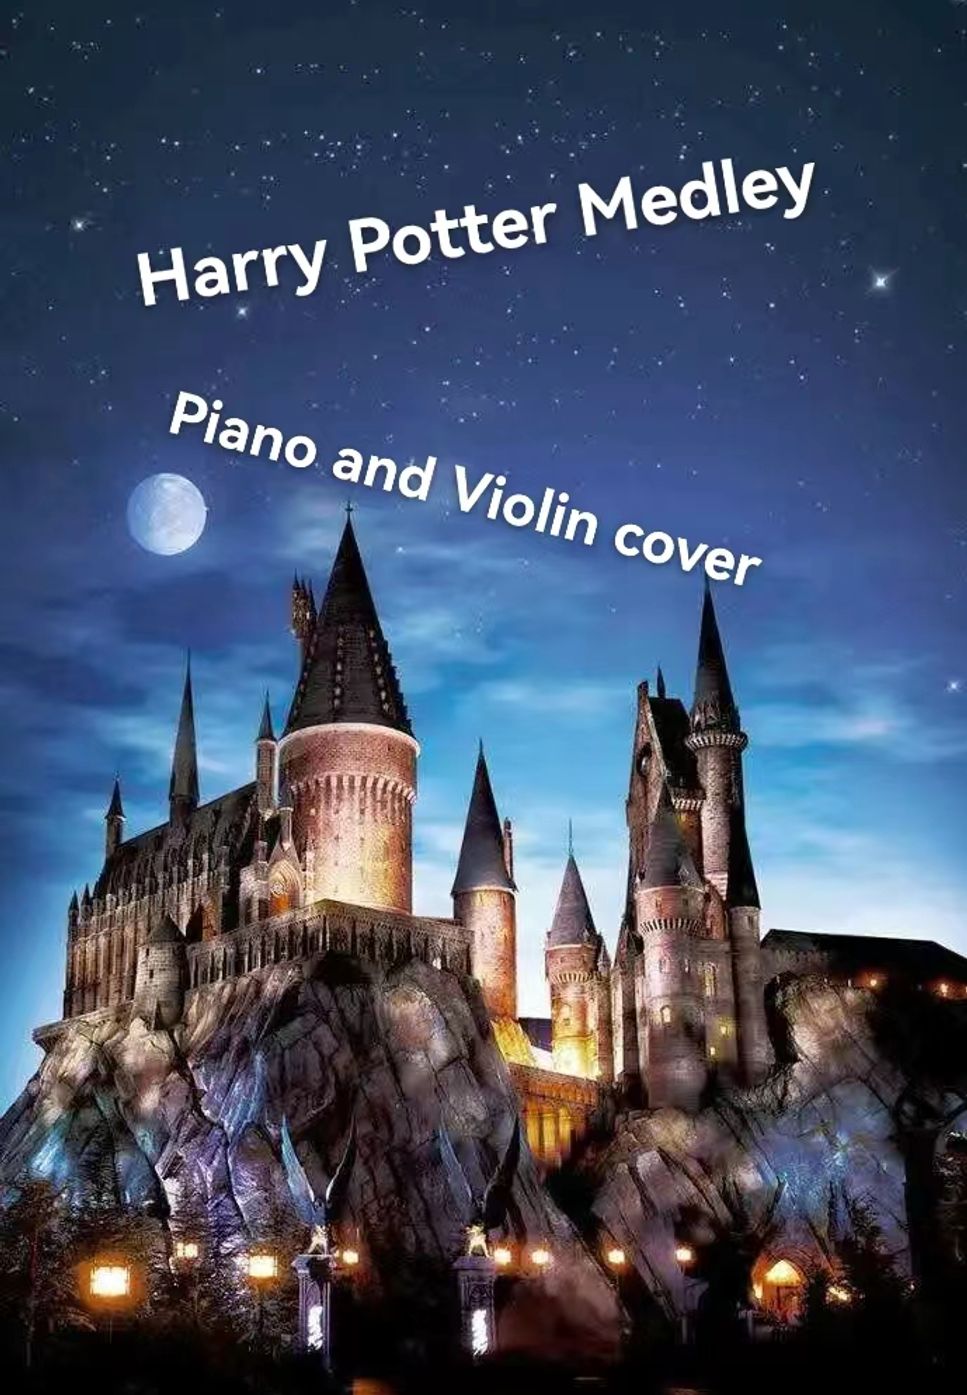 All Harry Potter soundtrack composers - Harry Potter Medley (哈利波特电影原声混编) by Captain Harry Chen